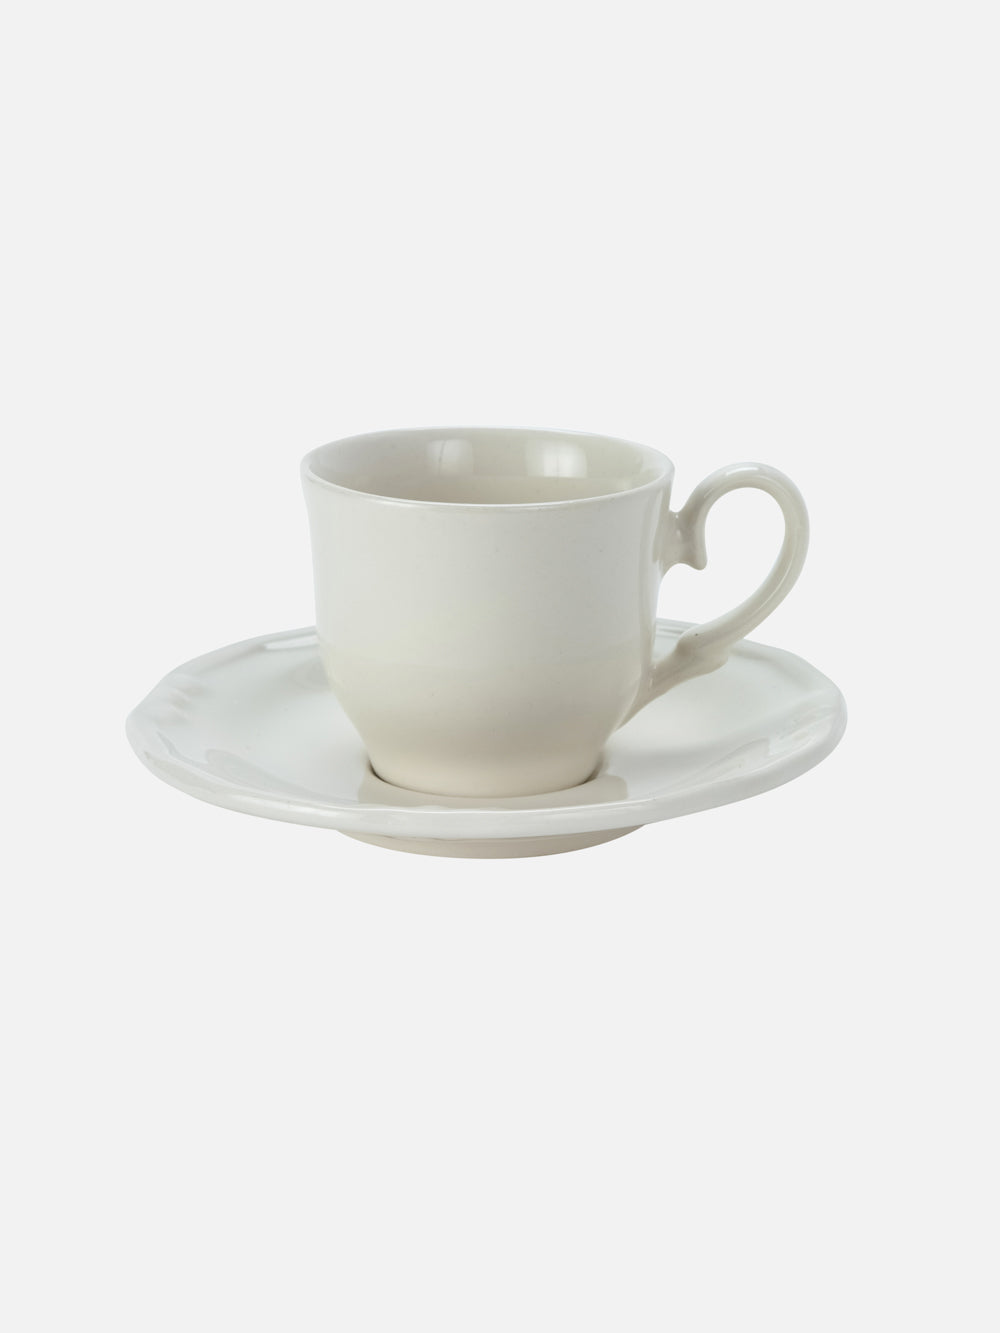 Vintage Ceramic Cup and Saucer Set